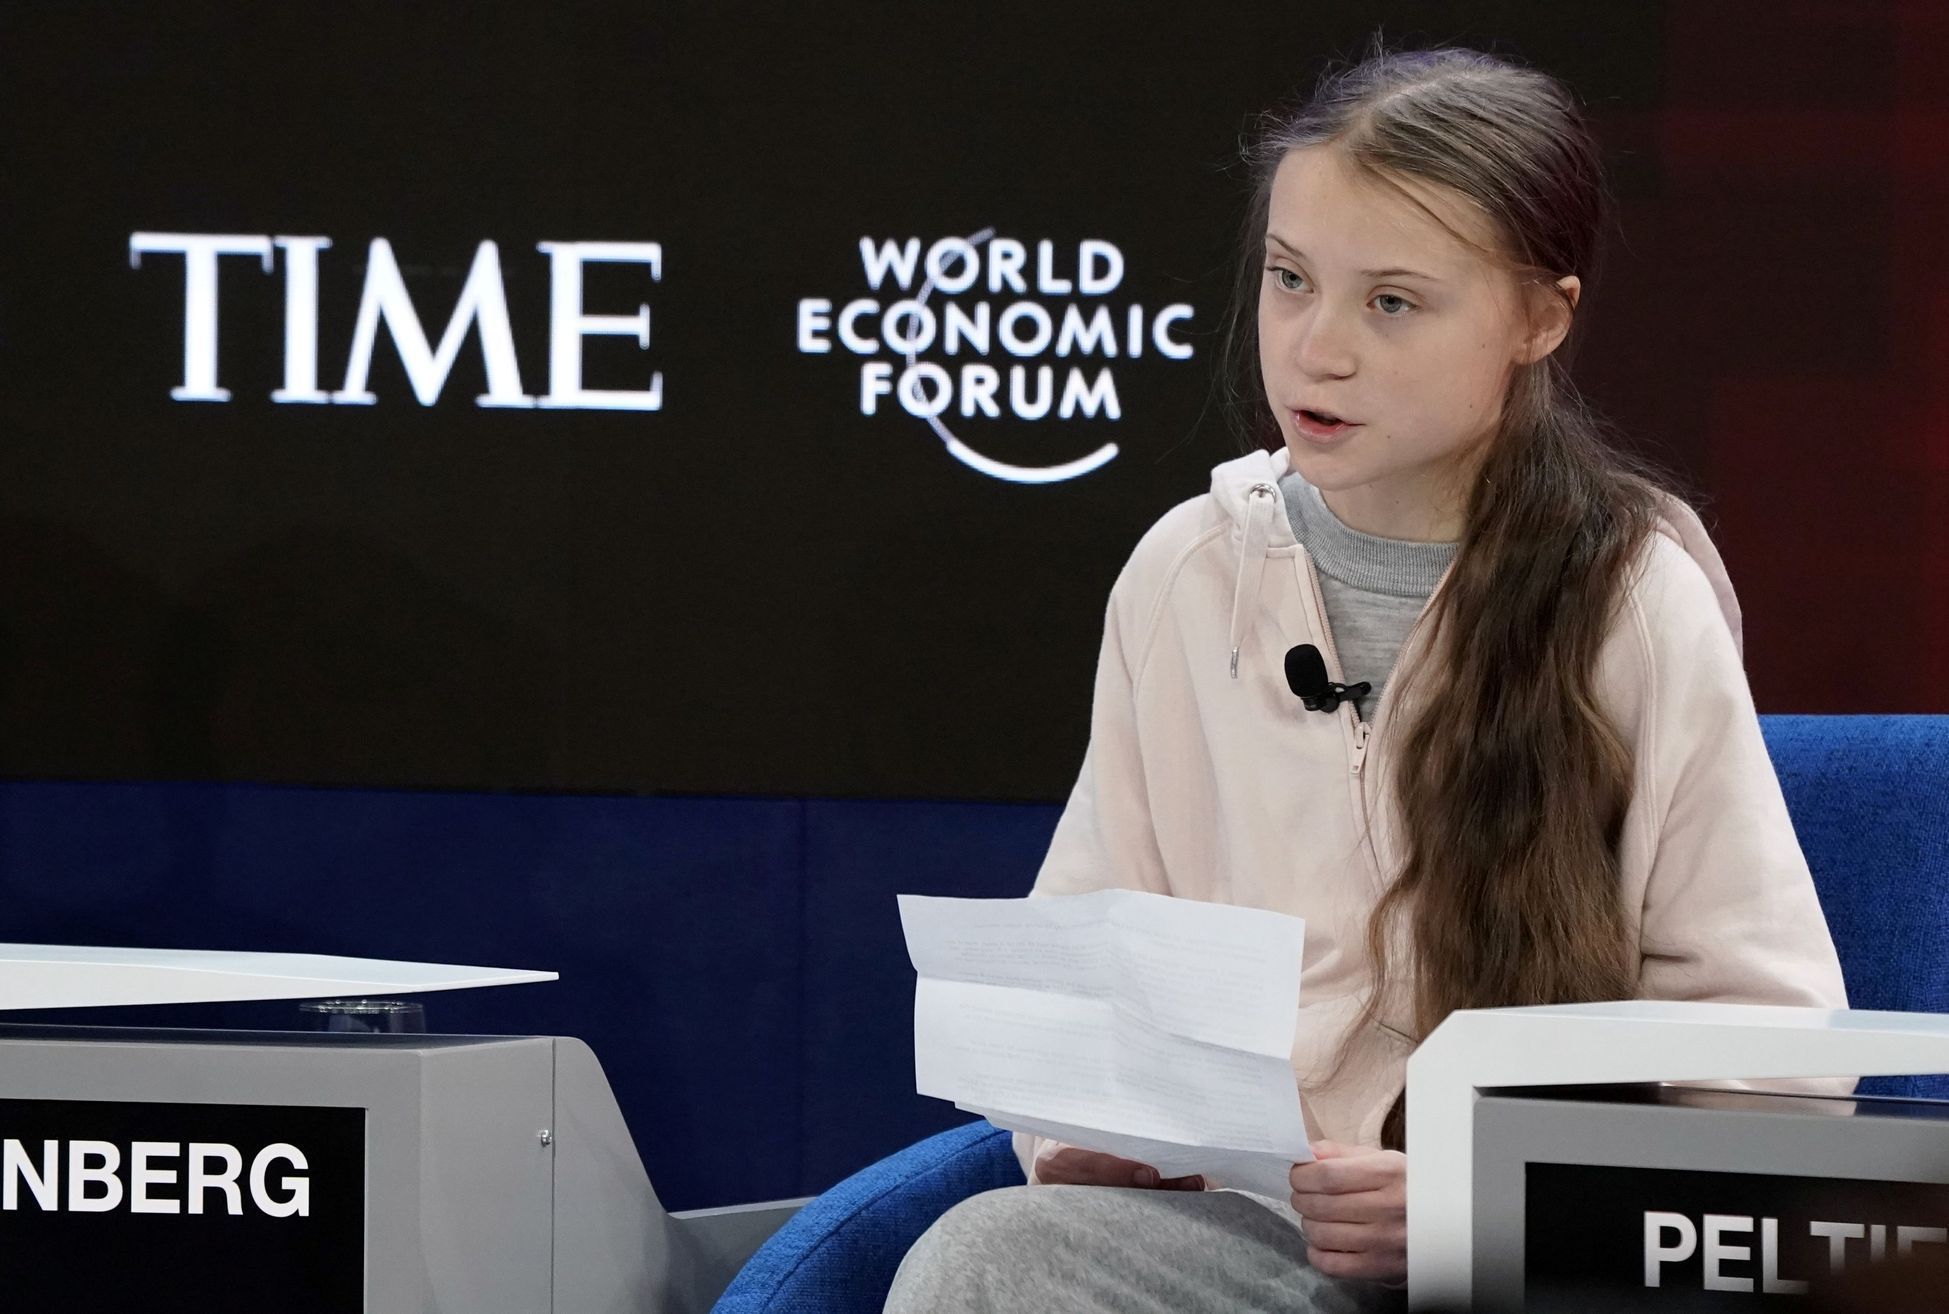 Greta Thunbergová-Světové ekonomické fórum Davos 2020